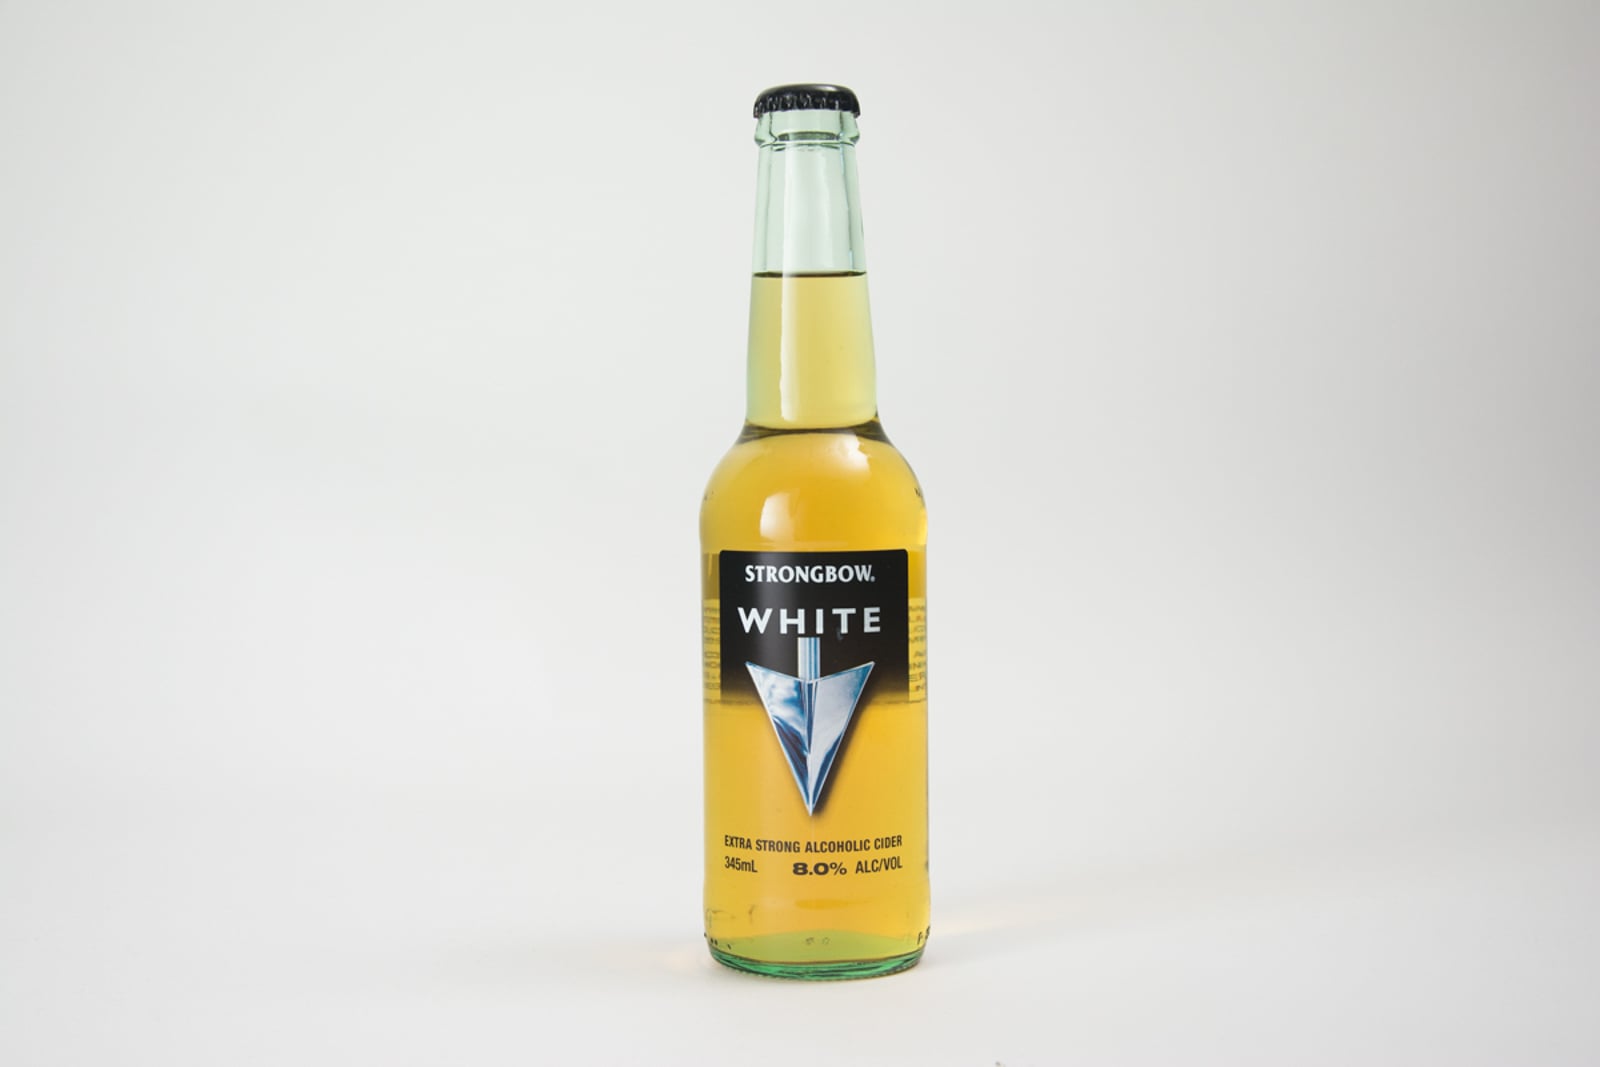 Strongbow White Beer Bottle, 345 ml